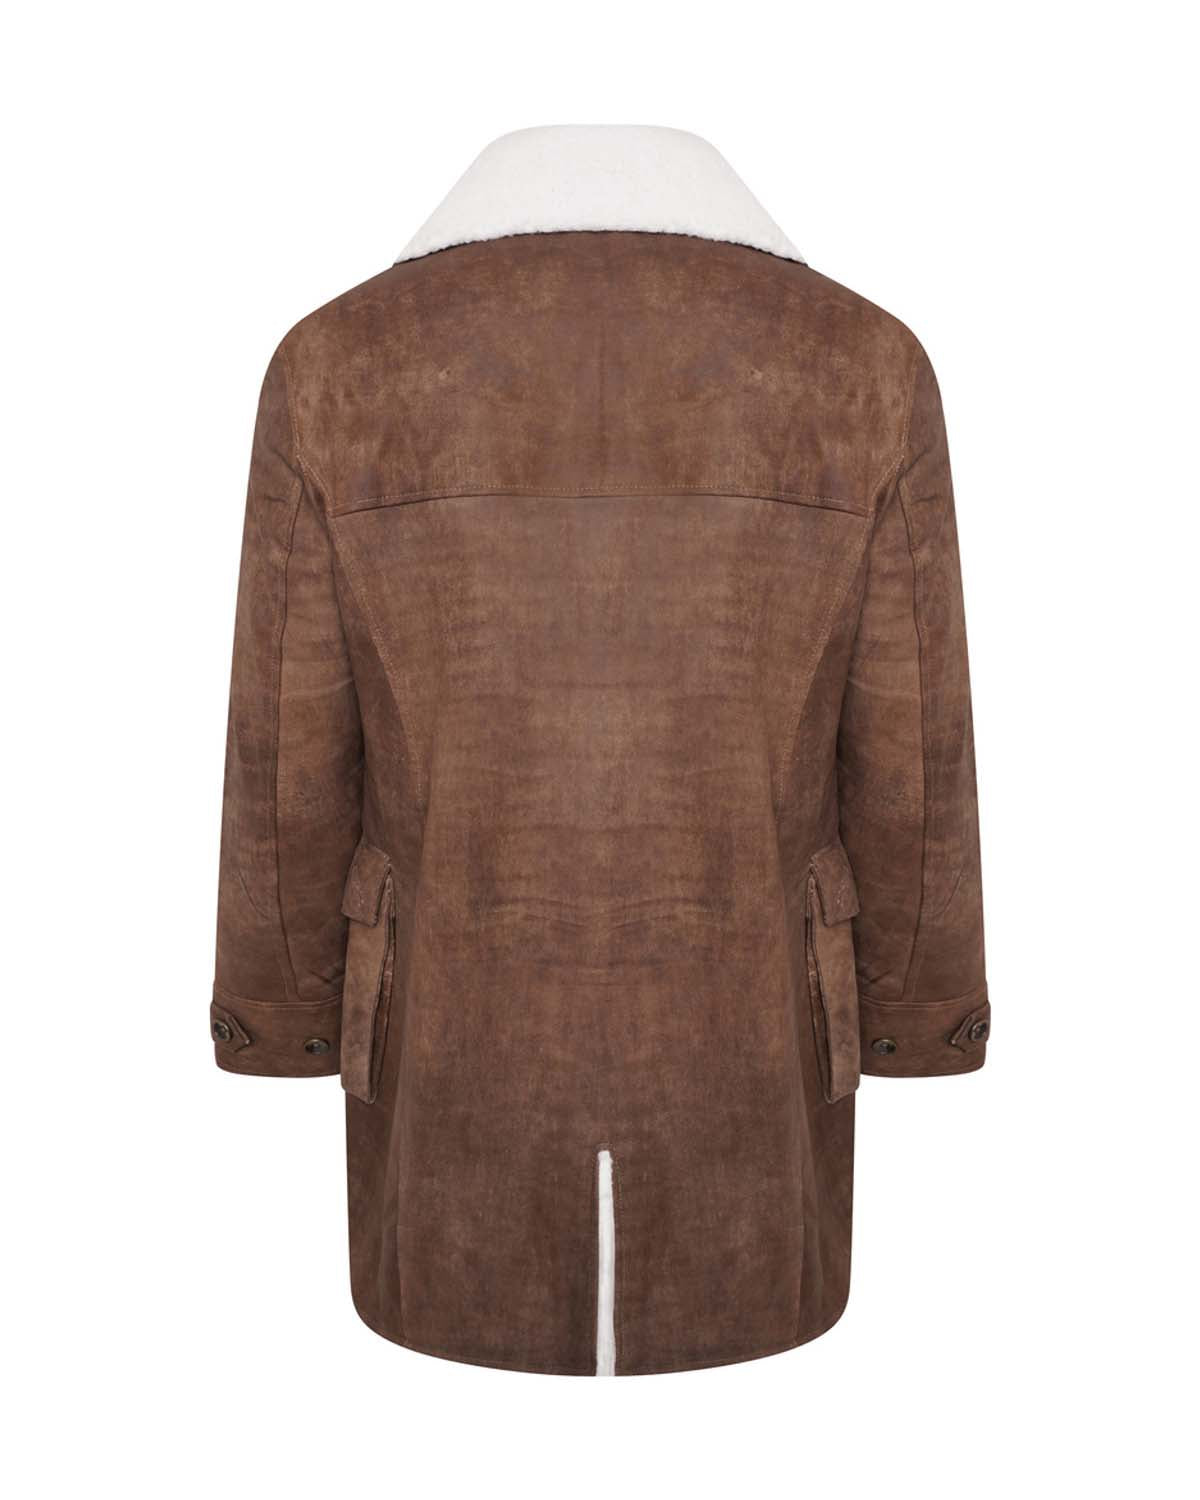 Bane Coat Original Distressed Brown | Elite Jacket